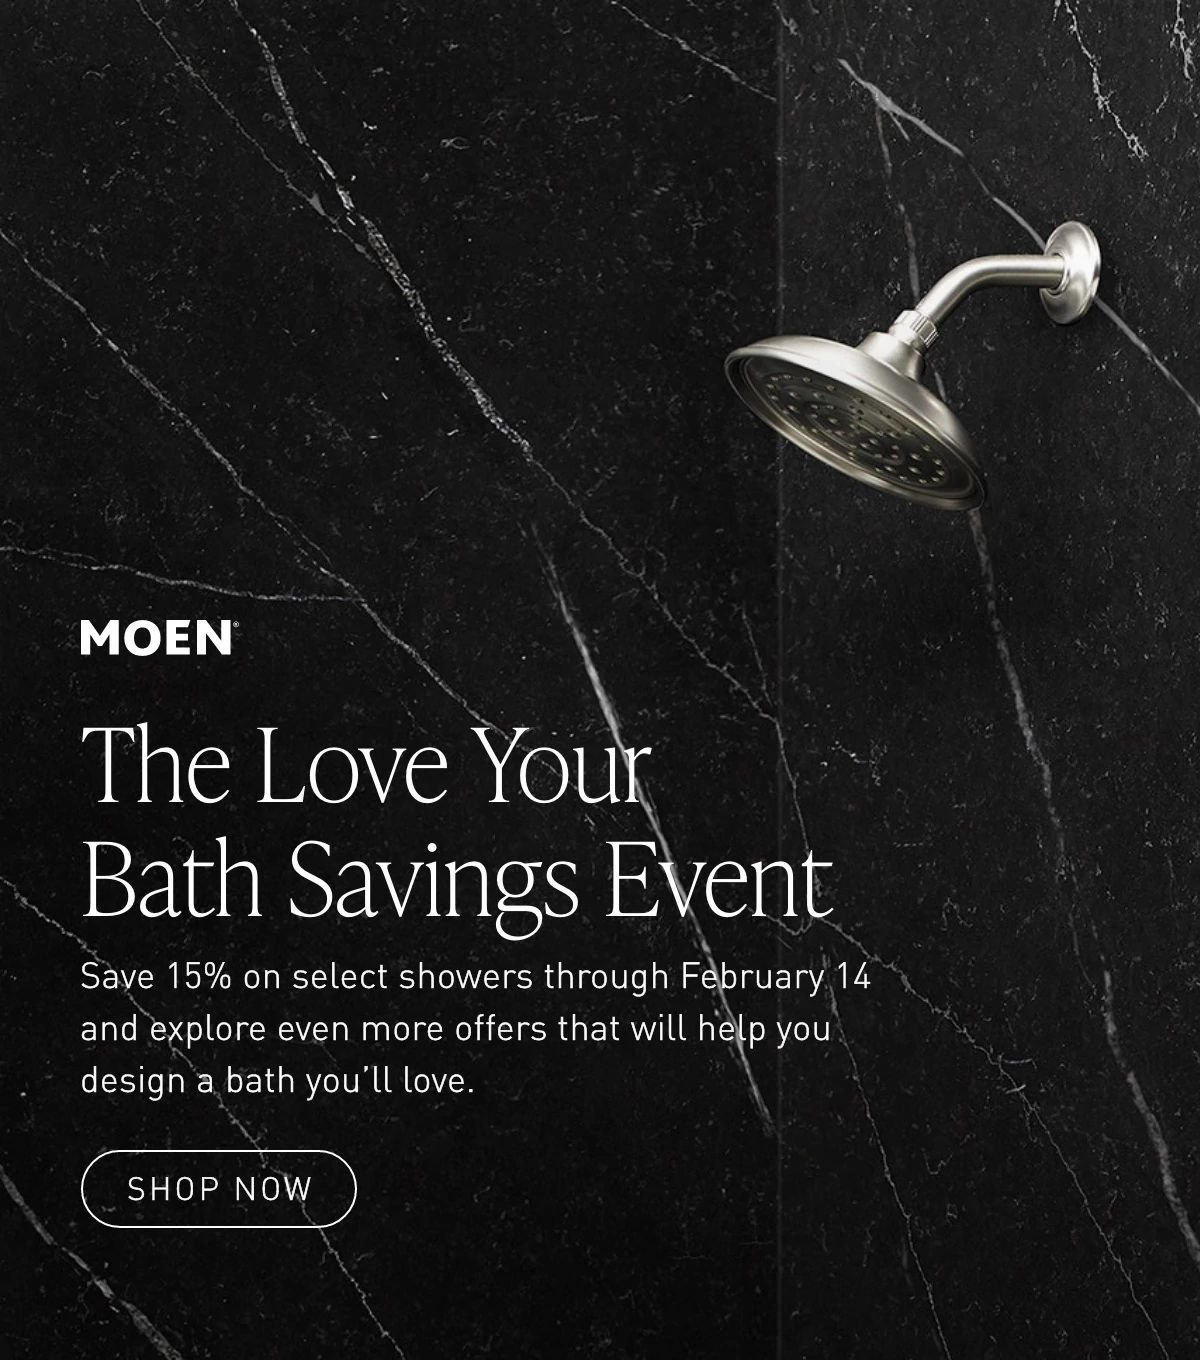 The Love Your Bath Savings Event